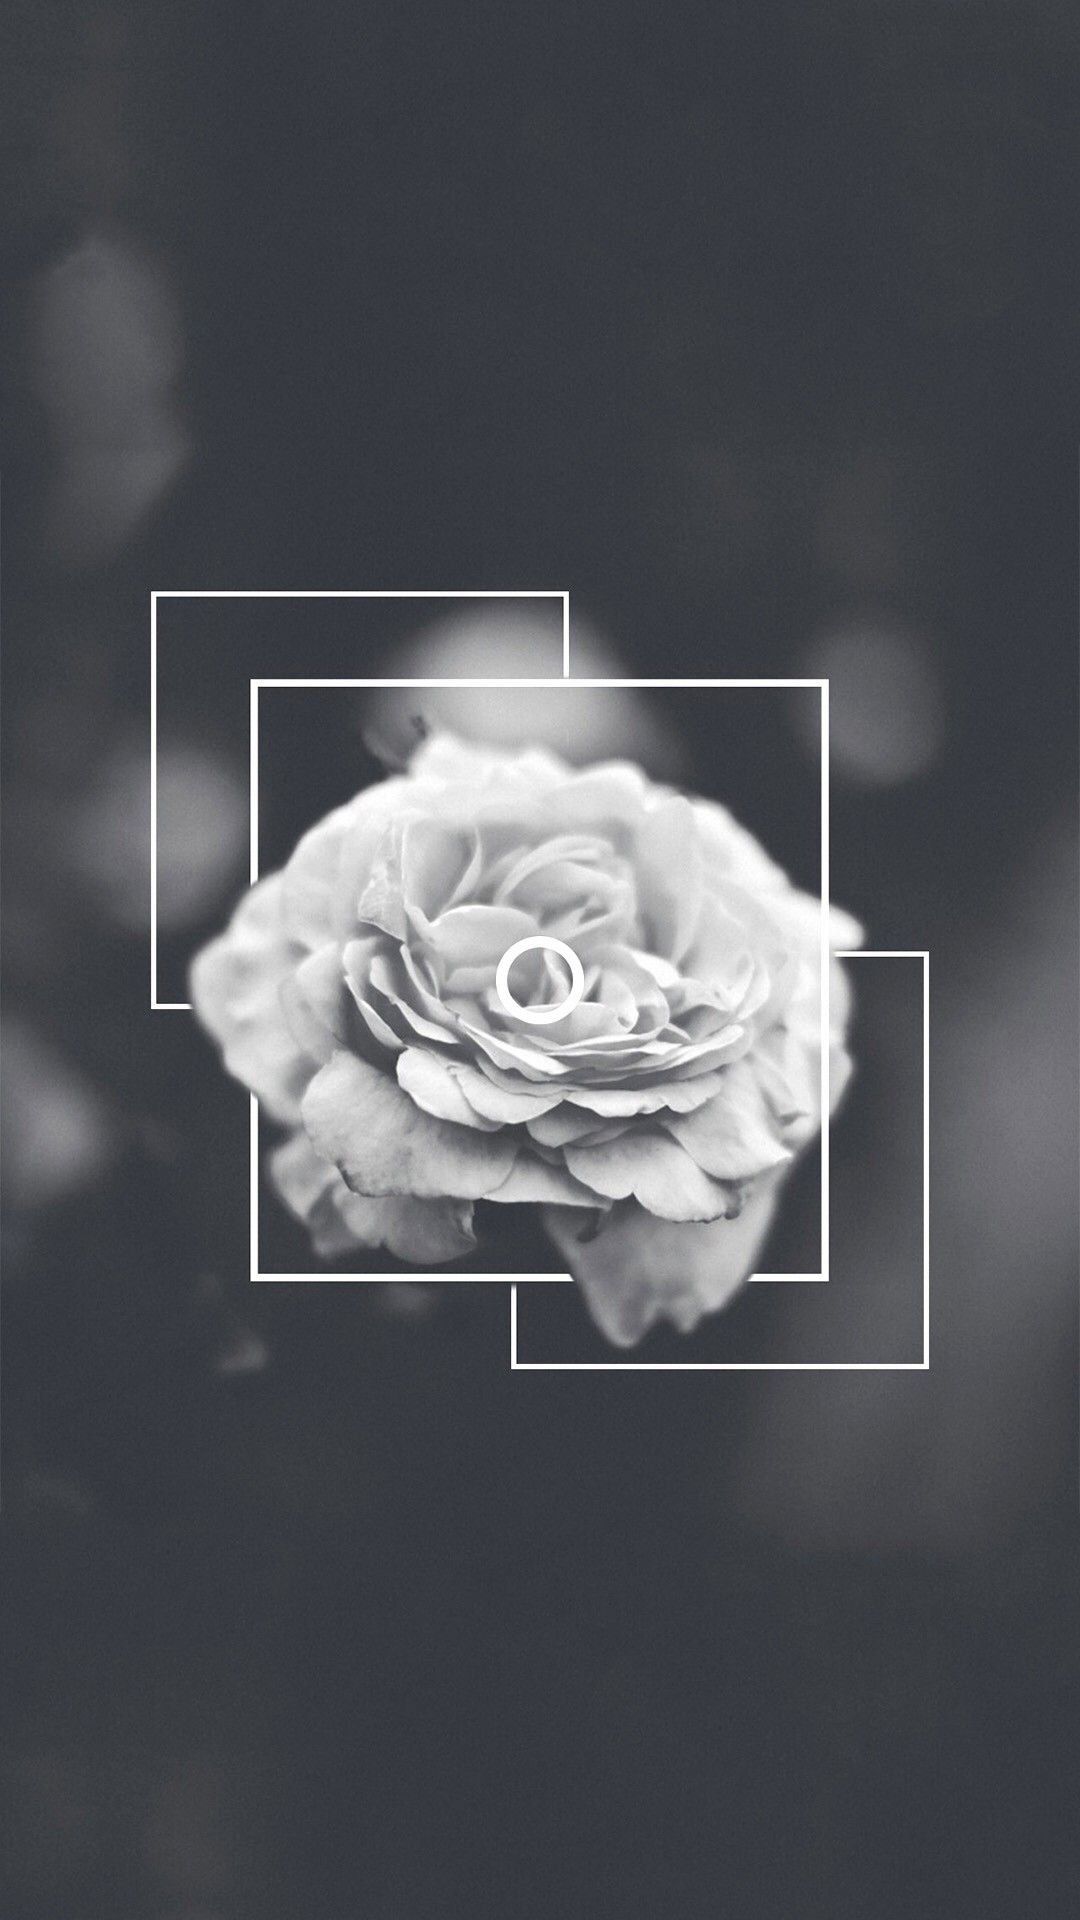 black roses background tumblr